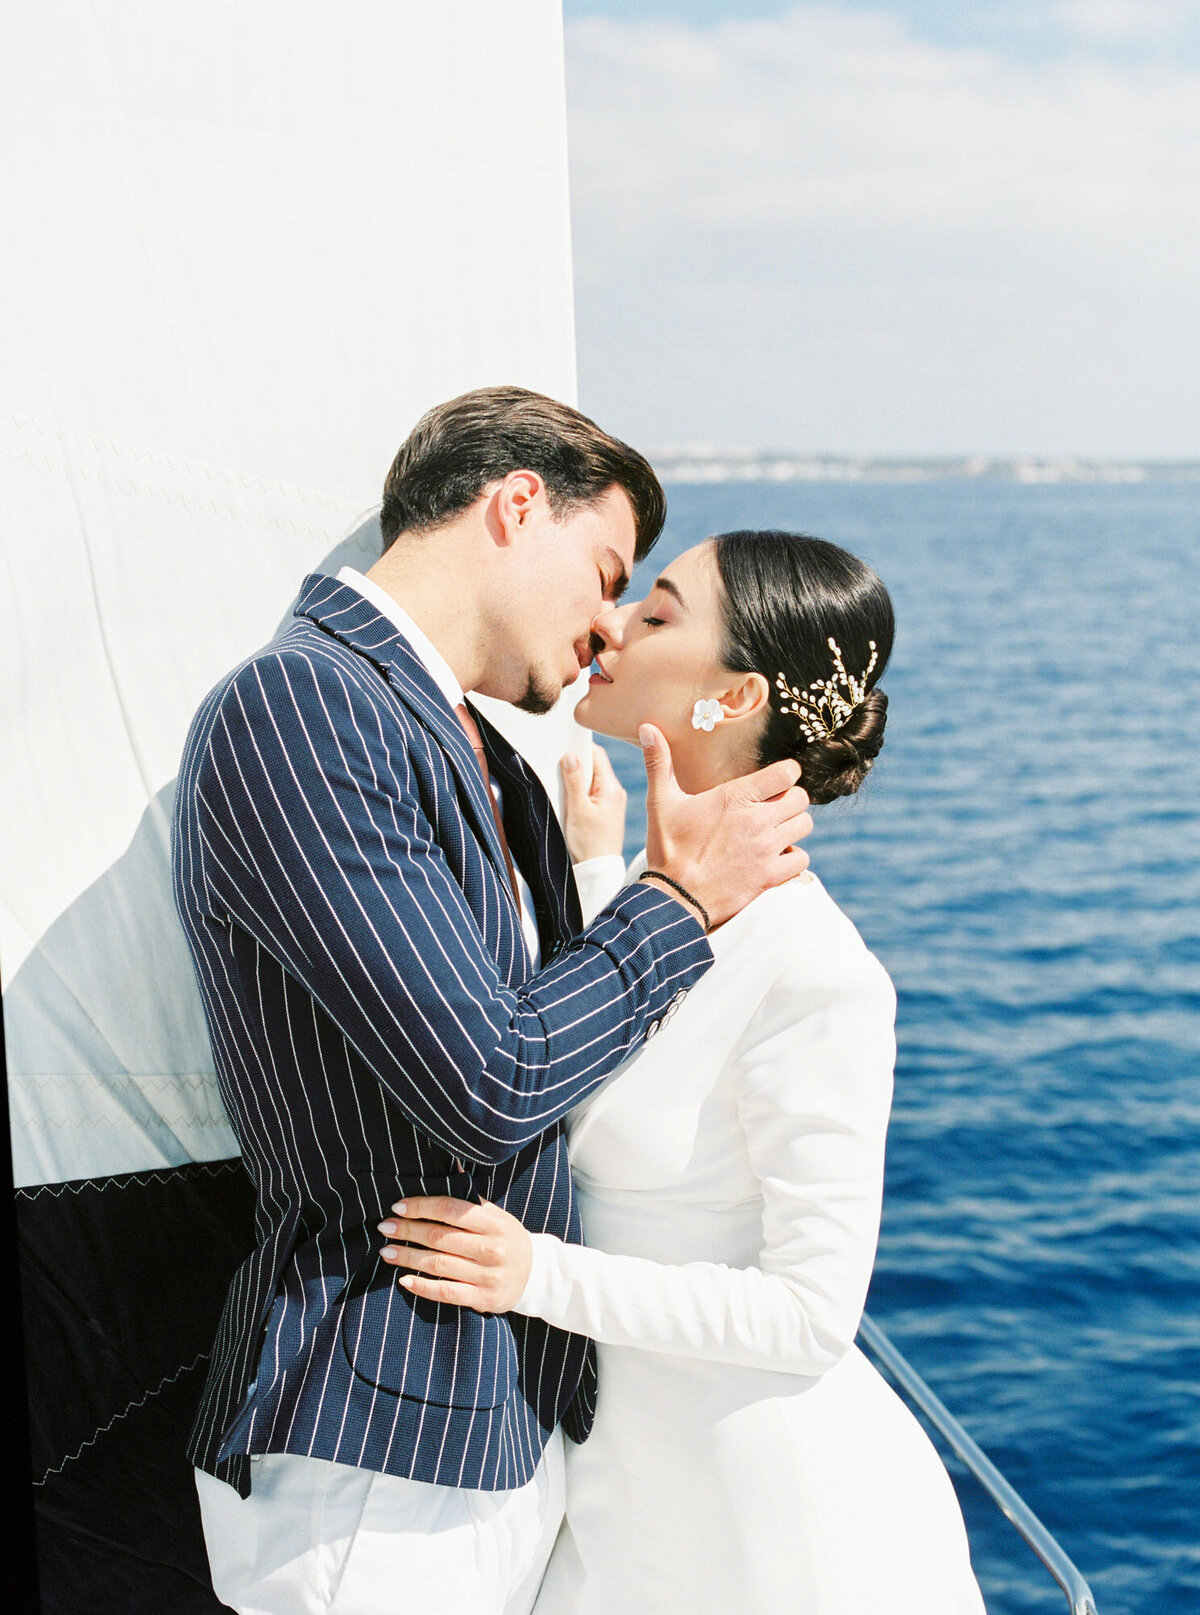 AndreasKGeorgiou-sailing-boat-wedding-14